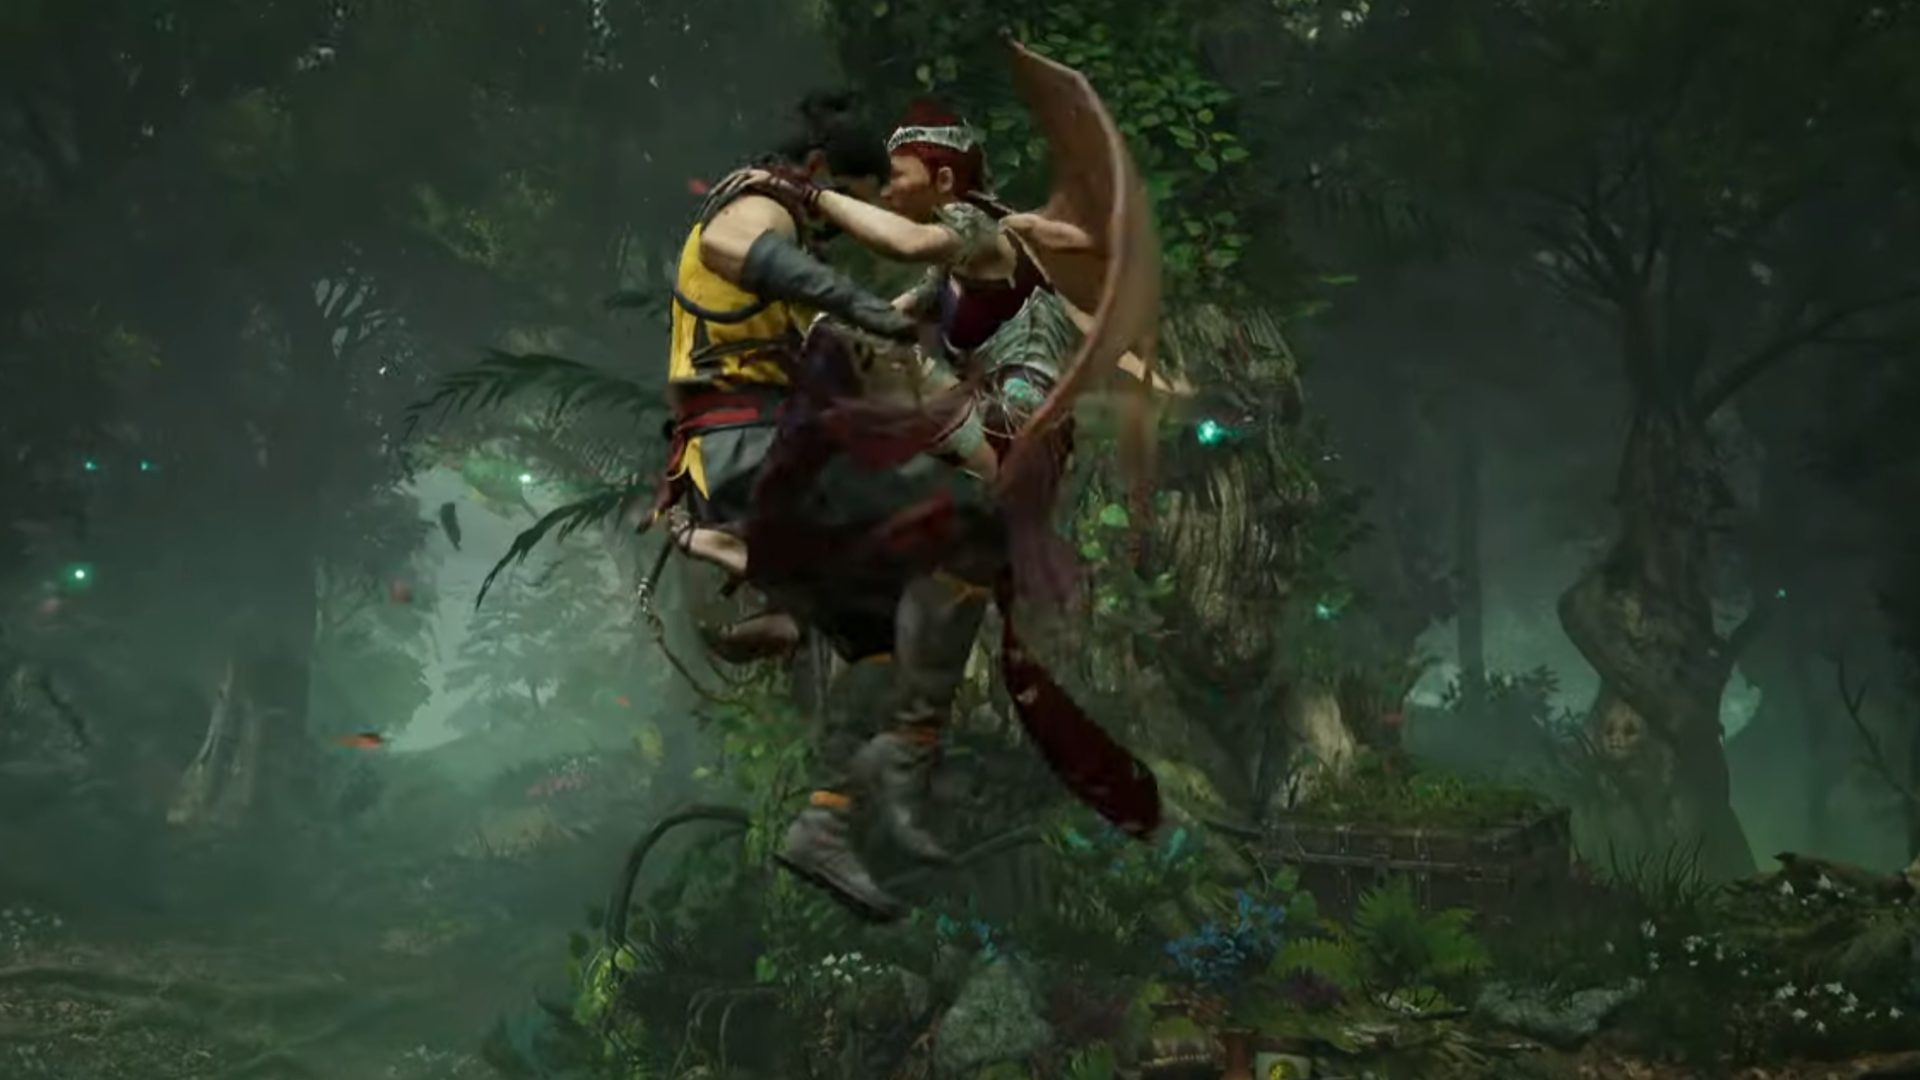 Mortal Kombat 1 characters: Nitara can be seen grabbing someone in the air